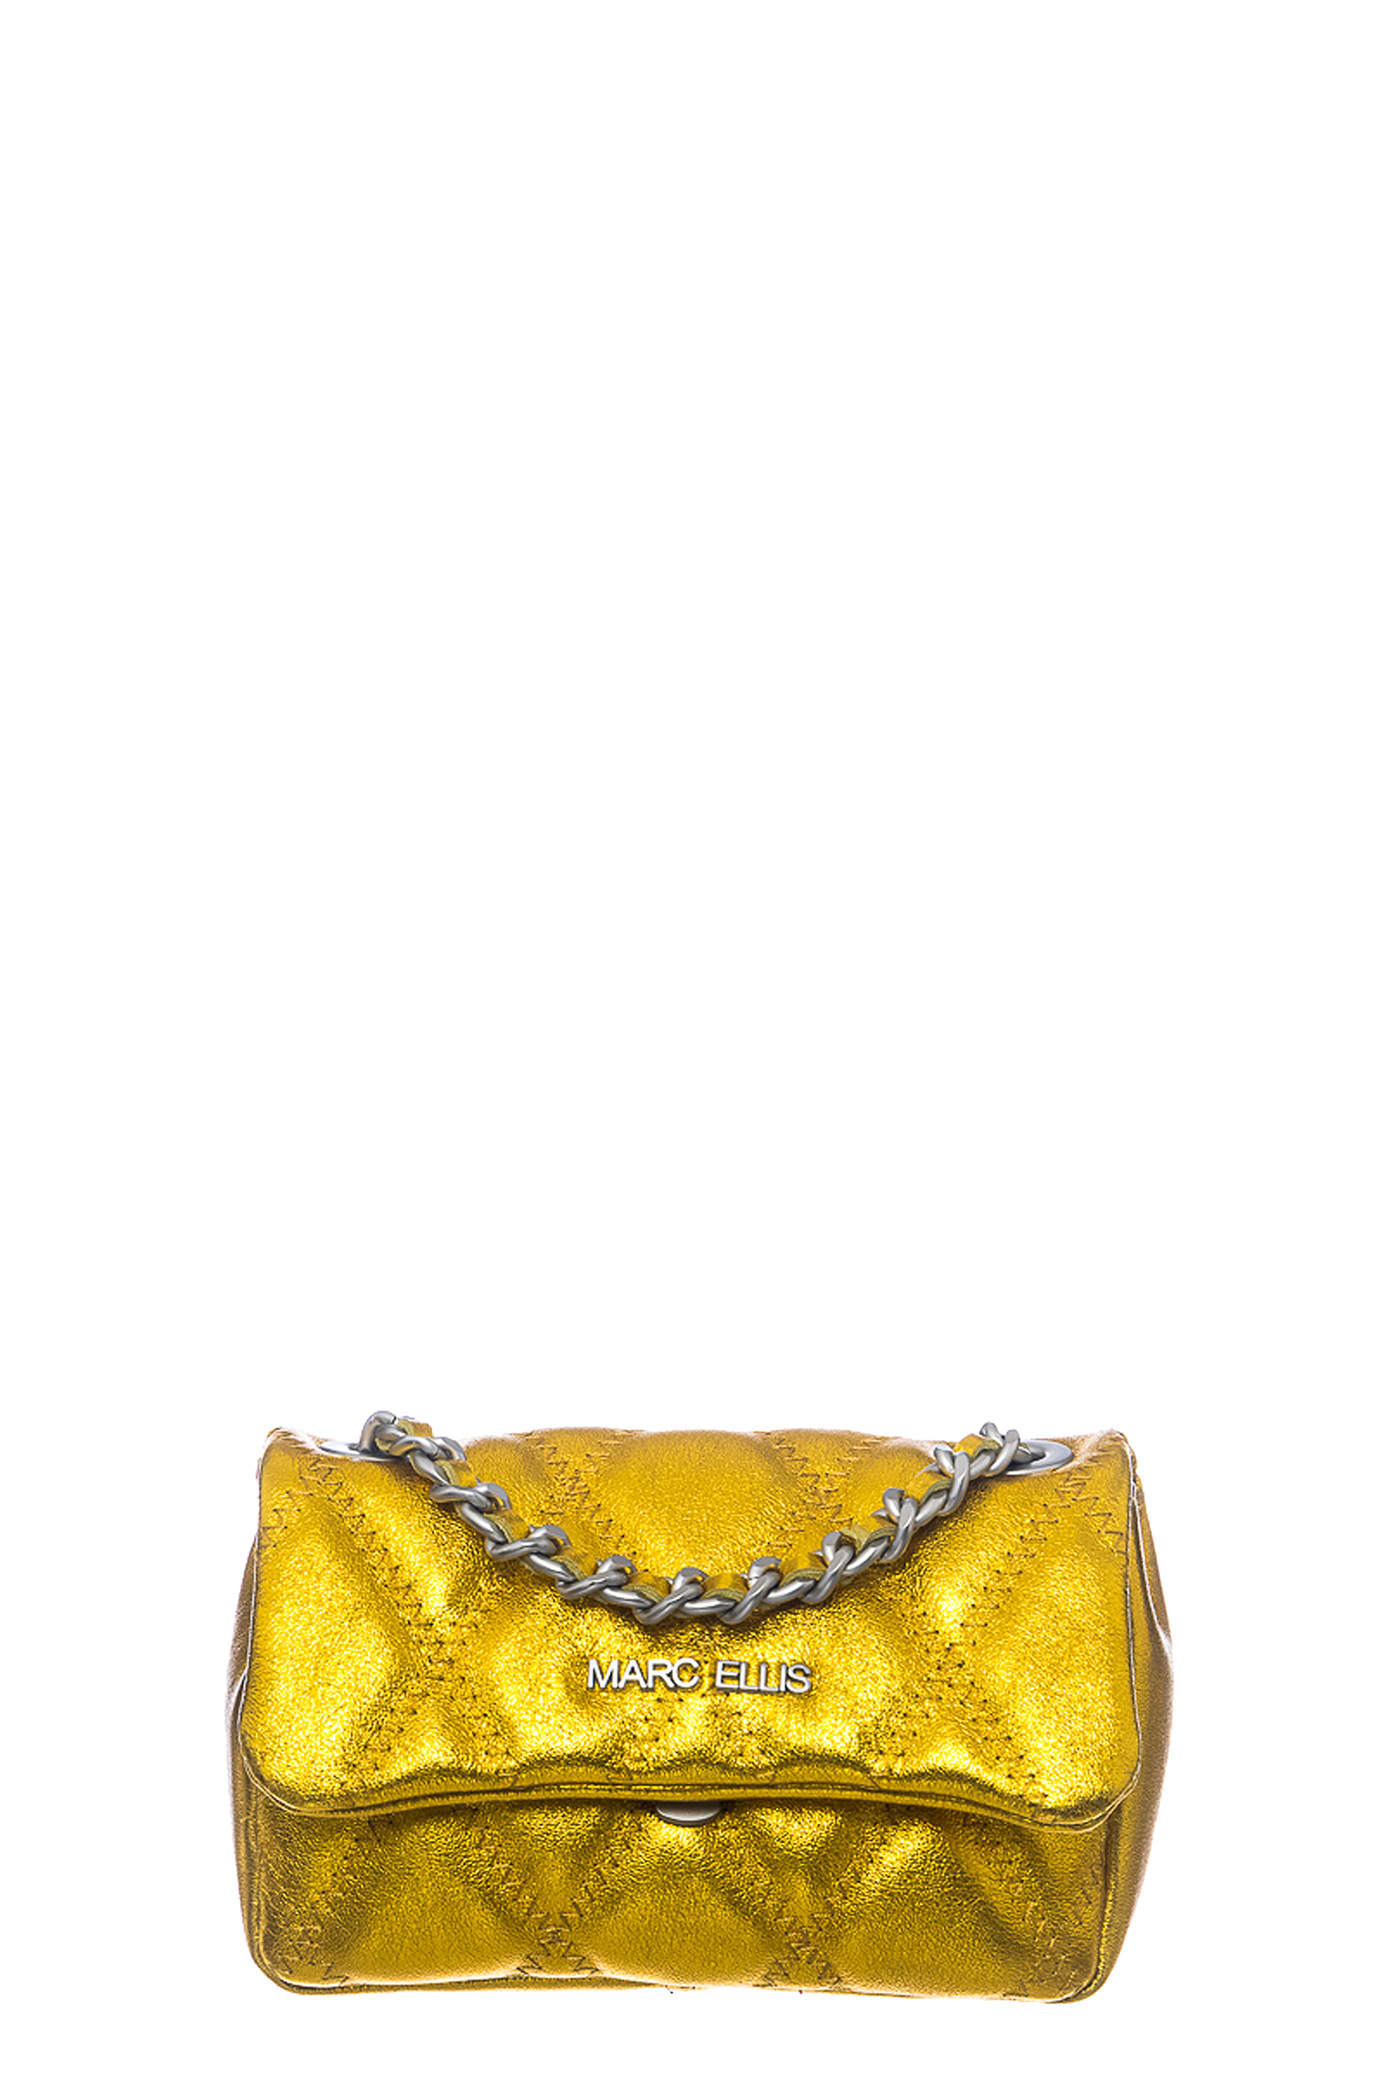 Marc Ellis Desdemona S Shoulder Bag In Yellow Leather